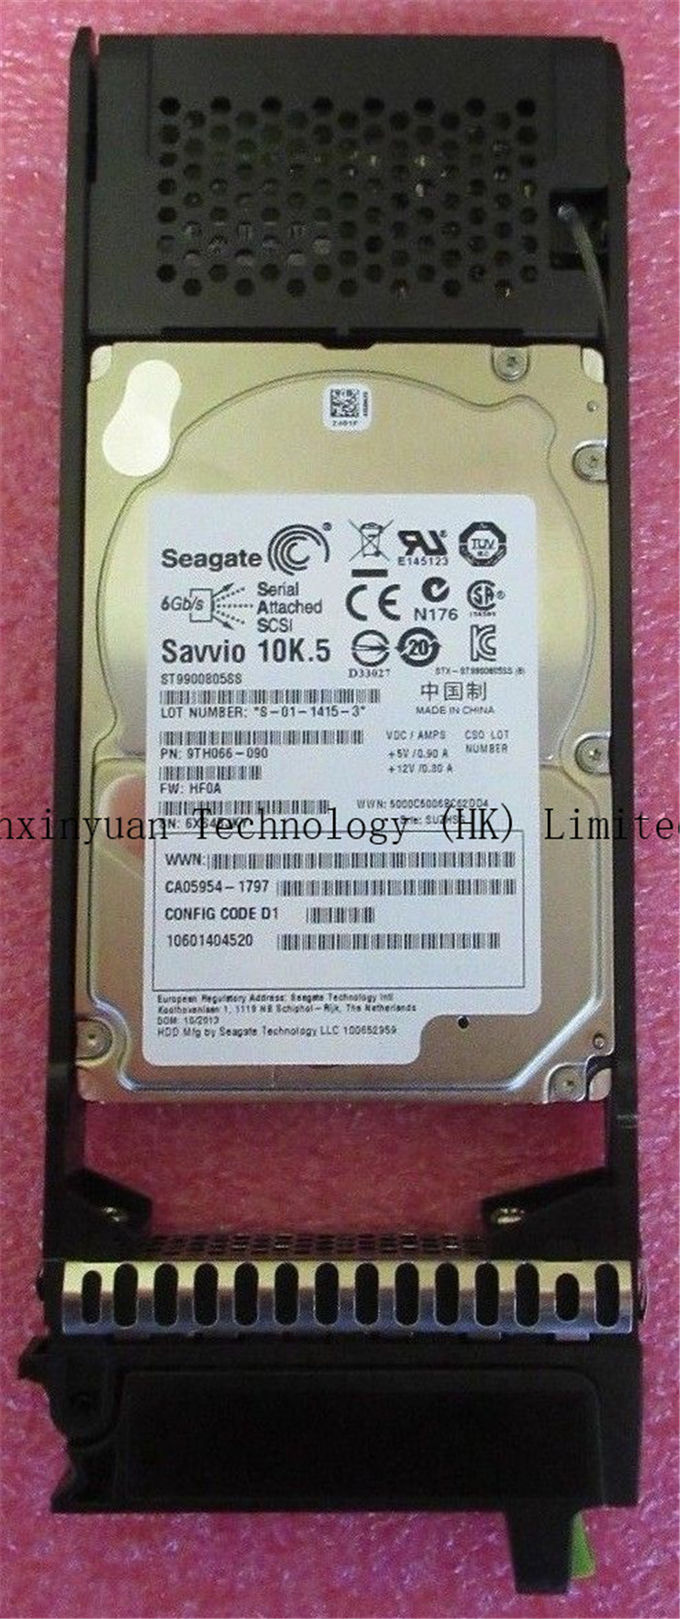 SAS 6GB/s 10K 2,5“ HDD van Fujitsueternus DX S2 HDD 900GB in Theebus CA07339-E524